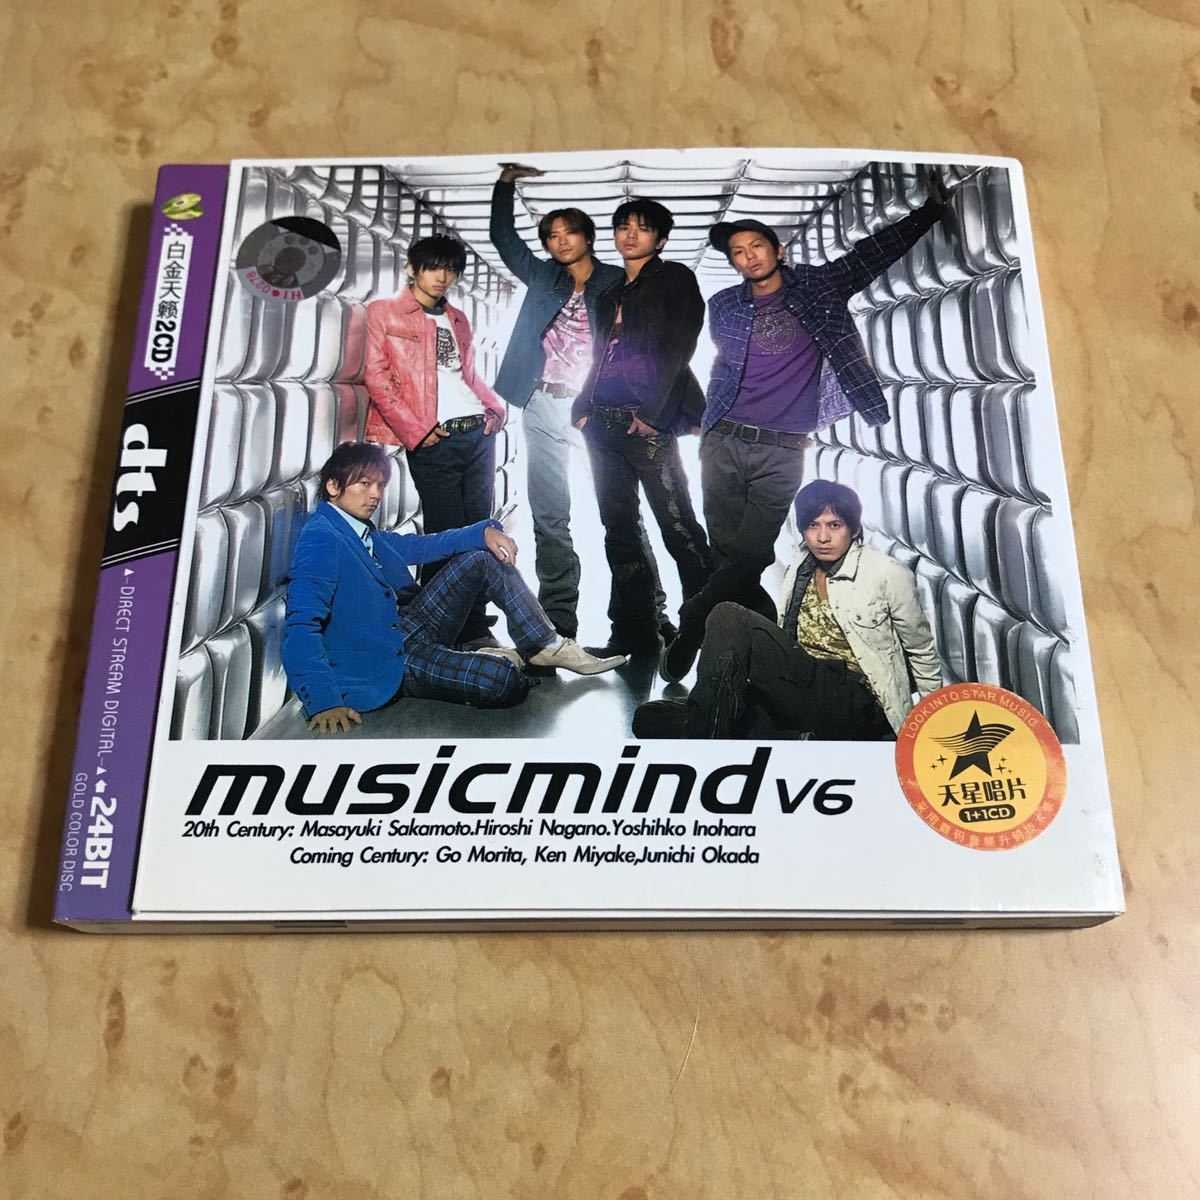 日本未発売 中古 V6 CD musicmind ∞ INFINITY LOVE & LIFE 2枚組 台湾輸入盤 韓国輸入盤 アジア輸入盤_画像1